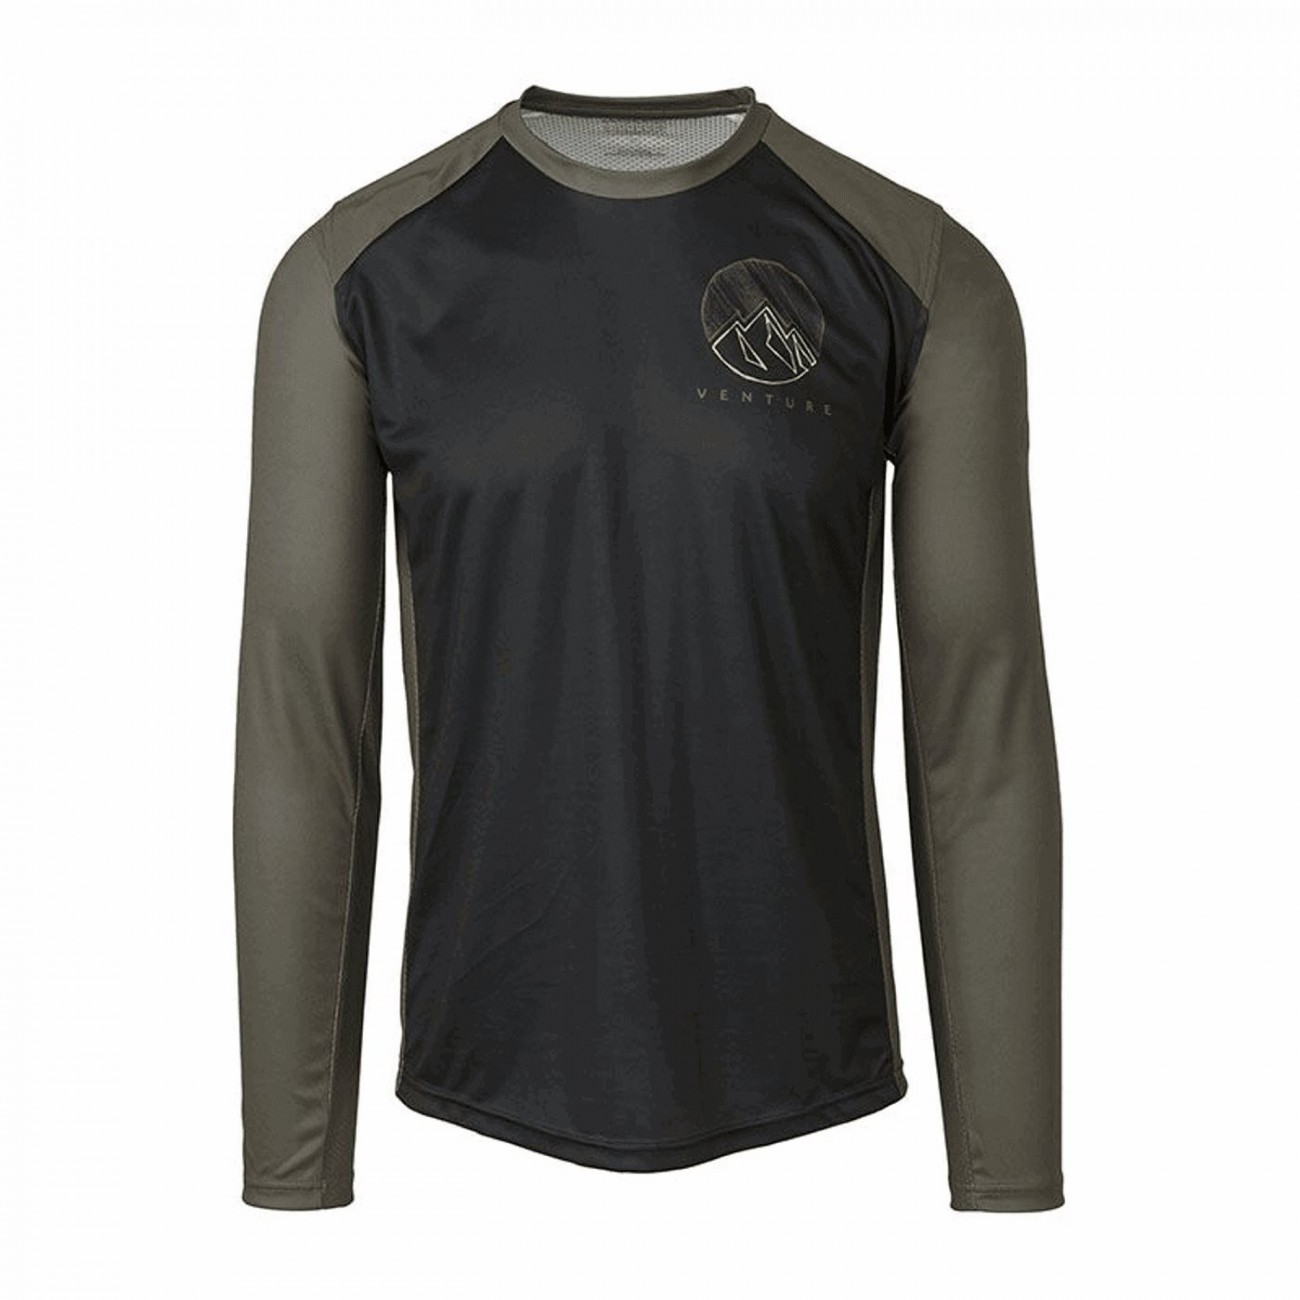 Venture mtb jersey black/army green - short sleeves size l - 1